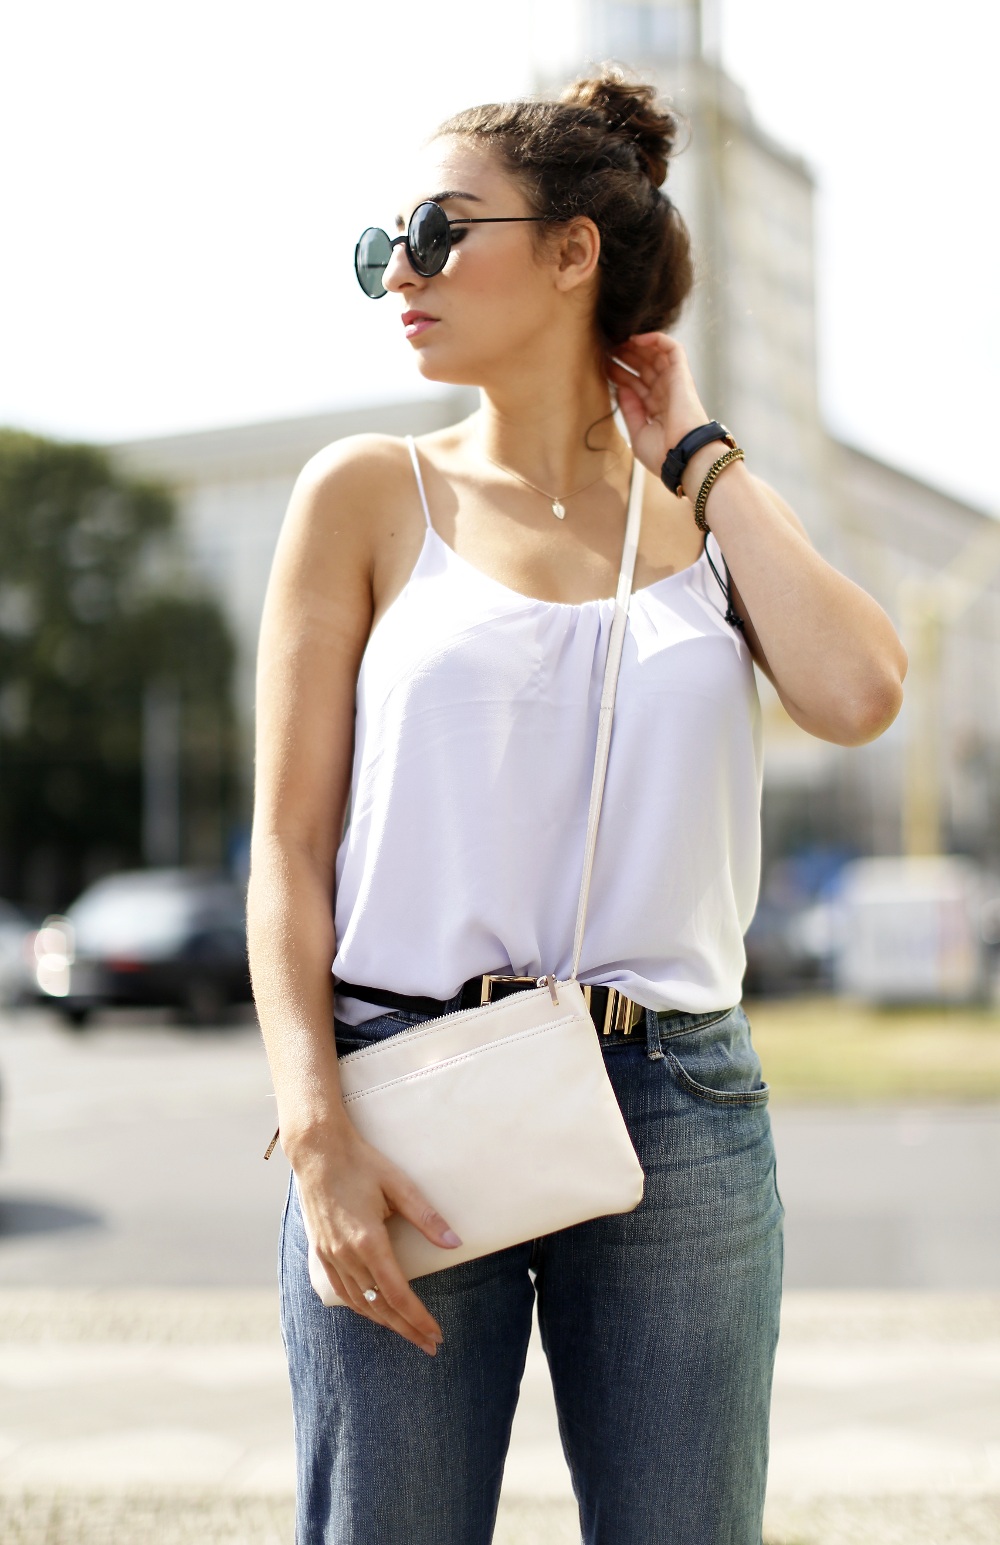 H&M Boyfriend Jeans Clarks Geta Sandals Round Sunglasses Strappy Top Fashionblogger Modeblog Berlin Samieze